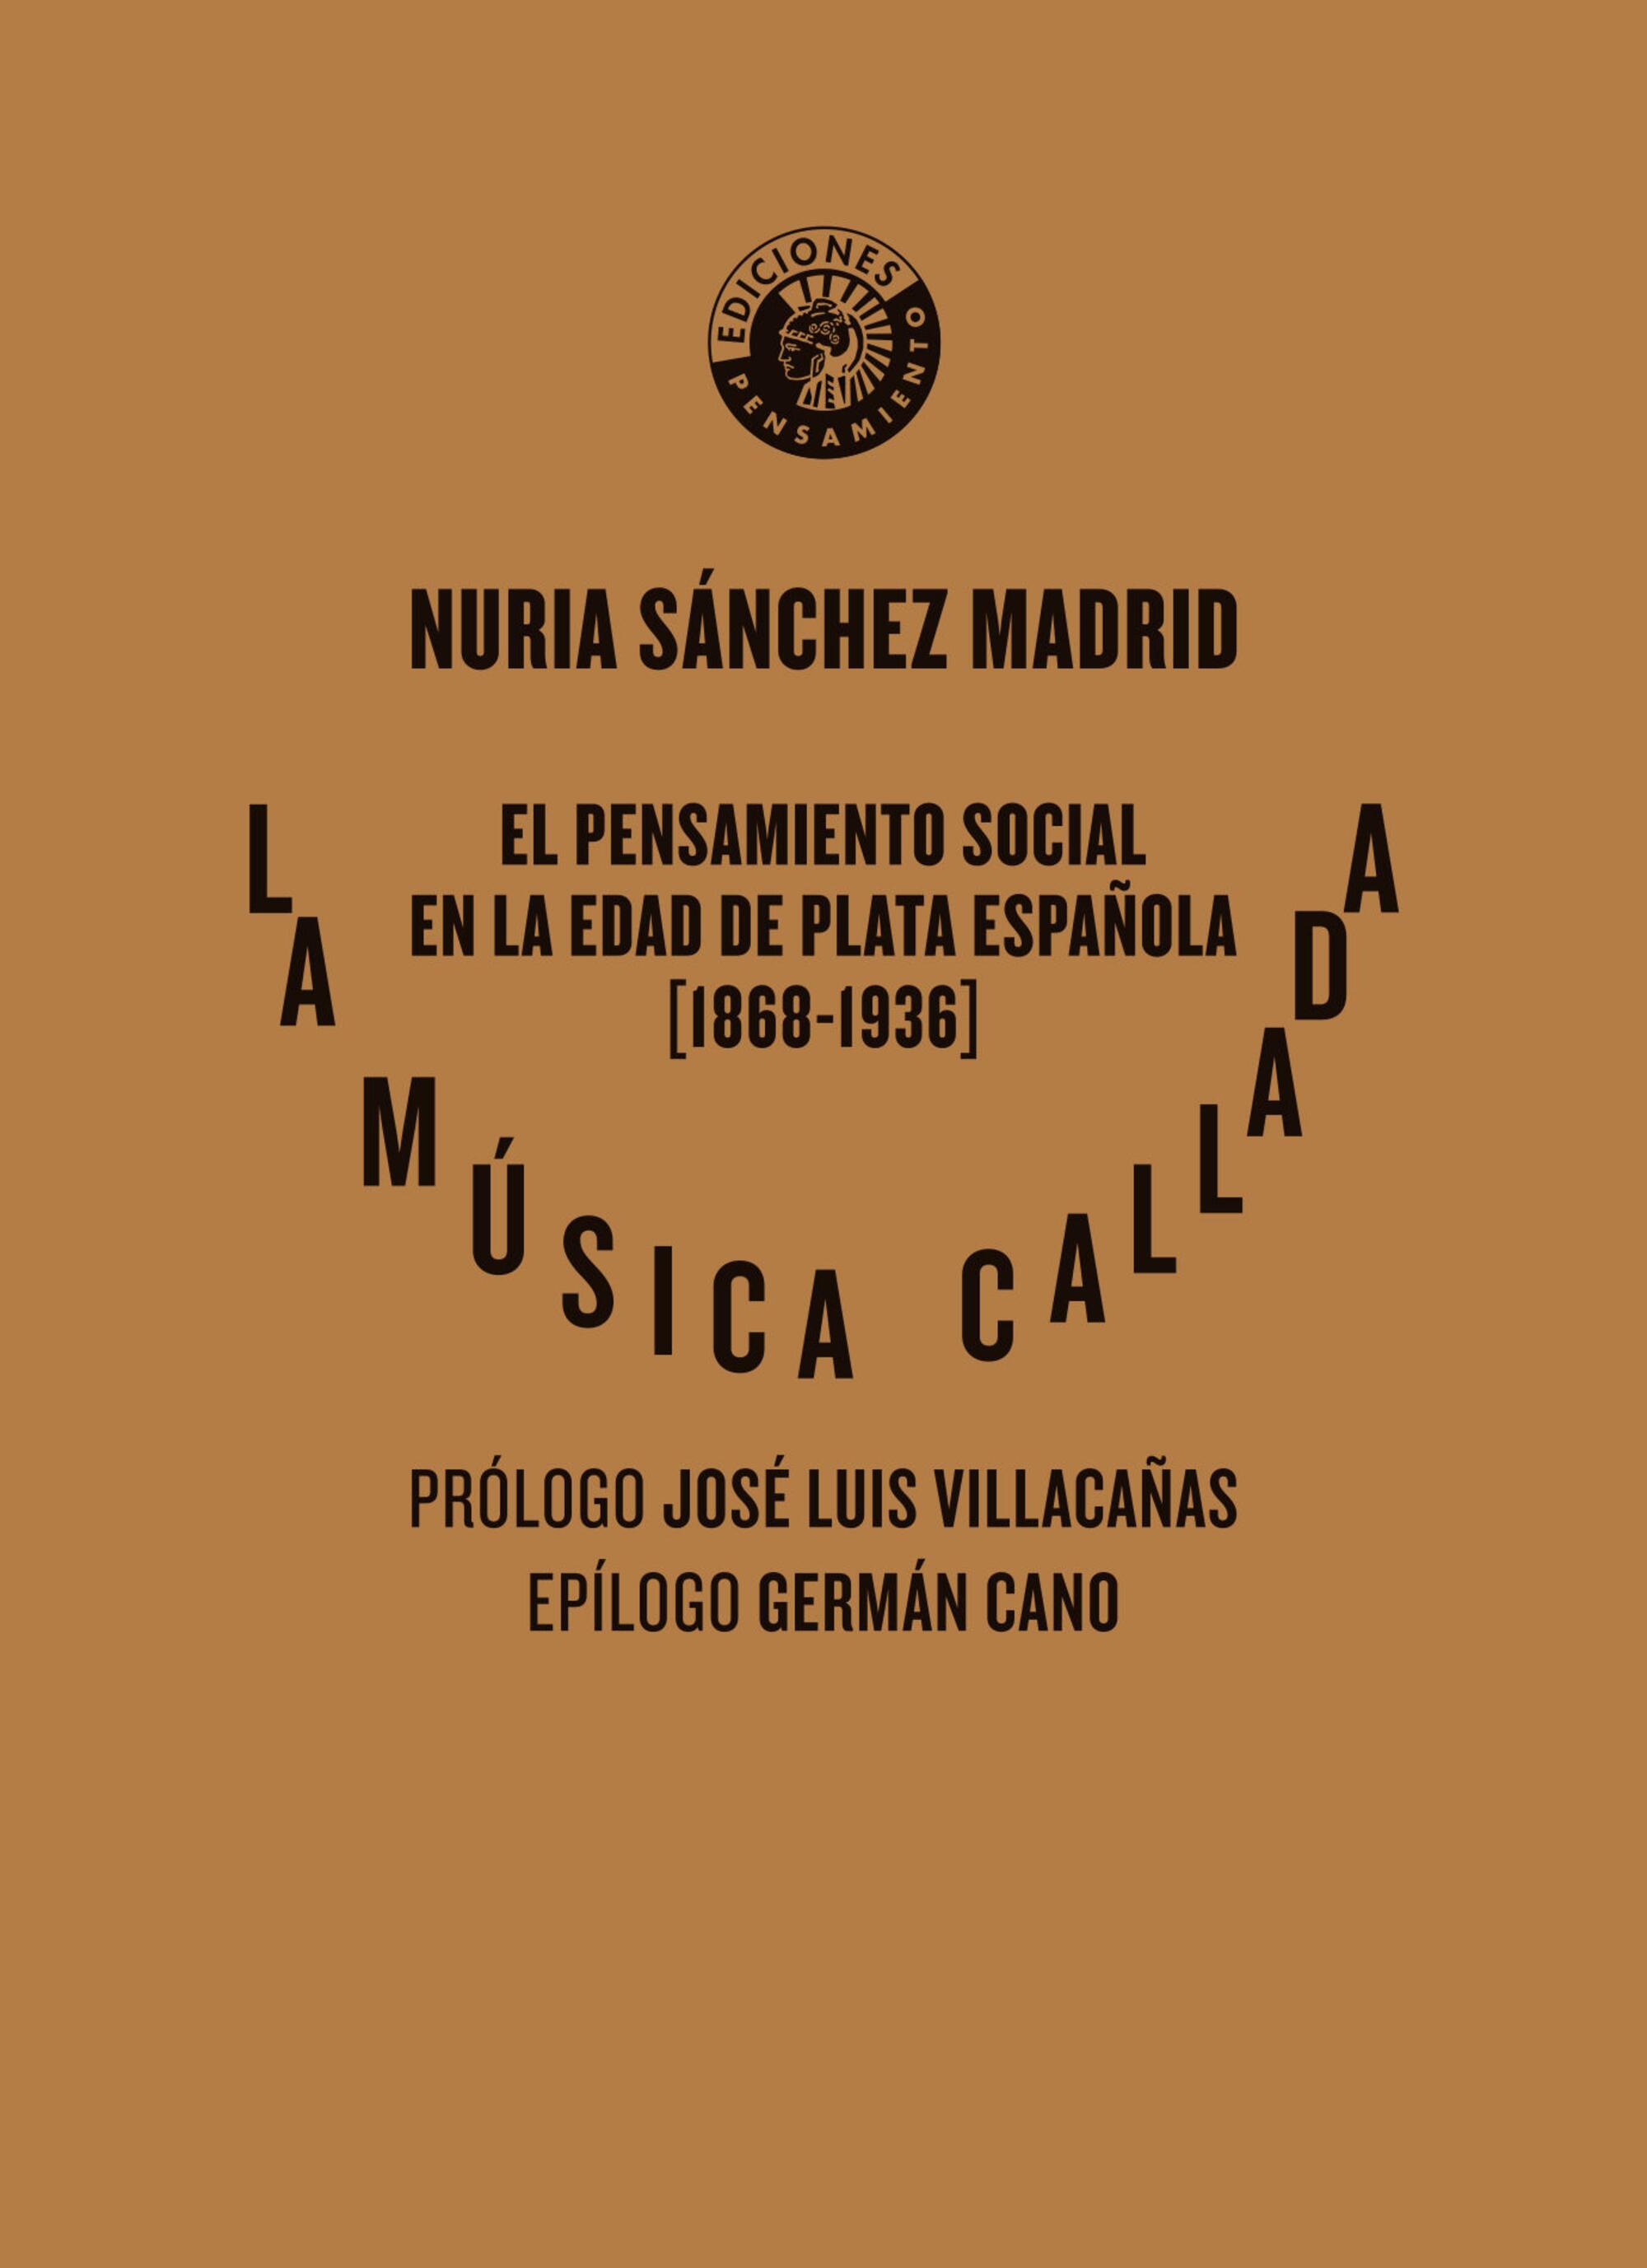 Nuria Sánchez Madrid